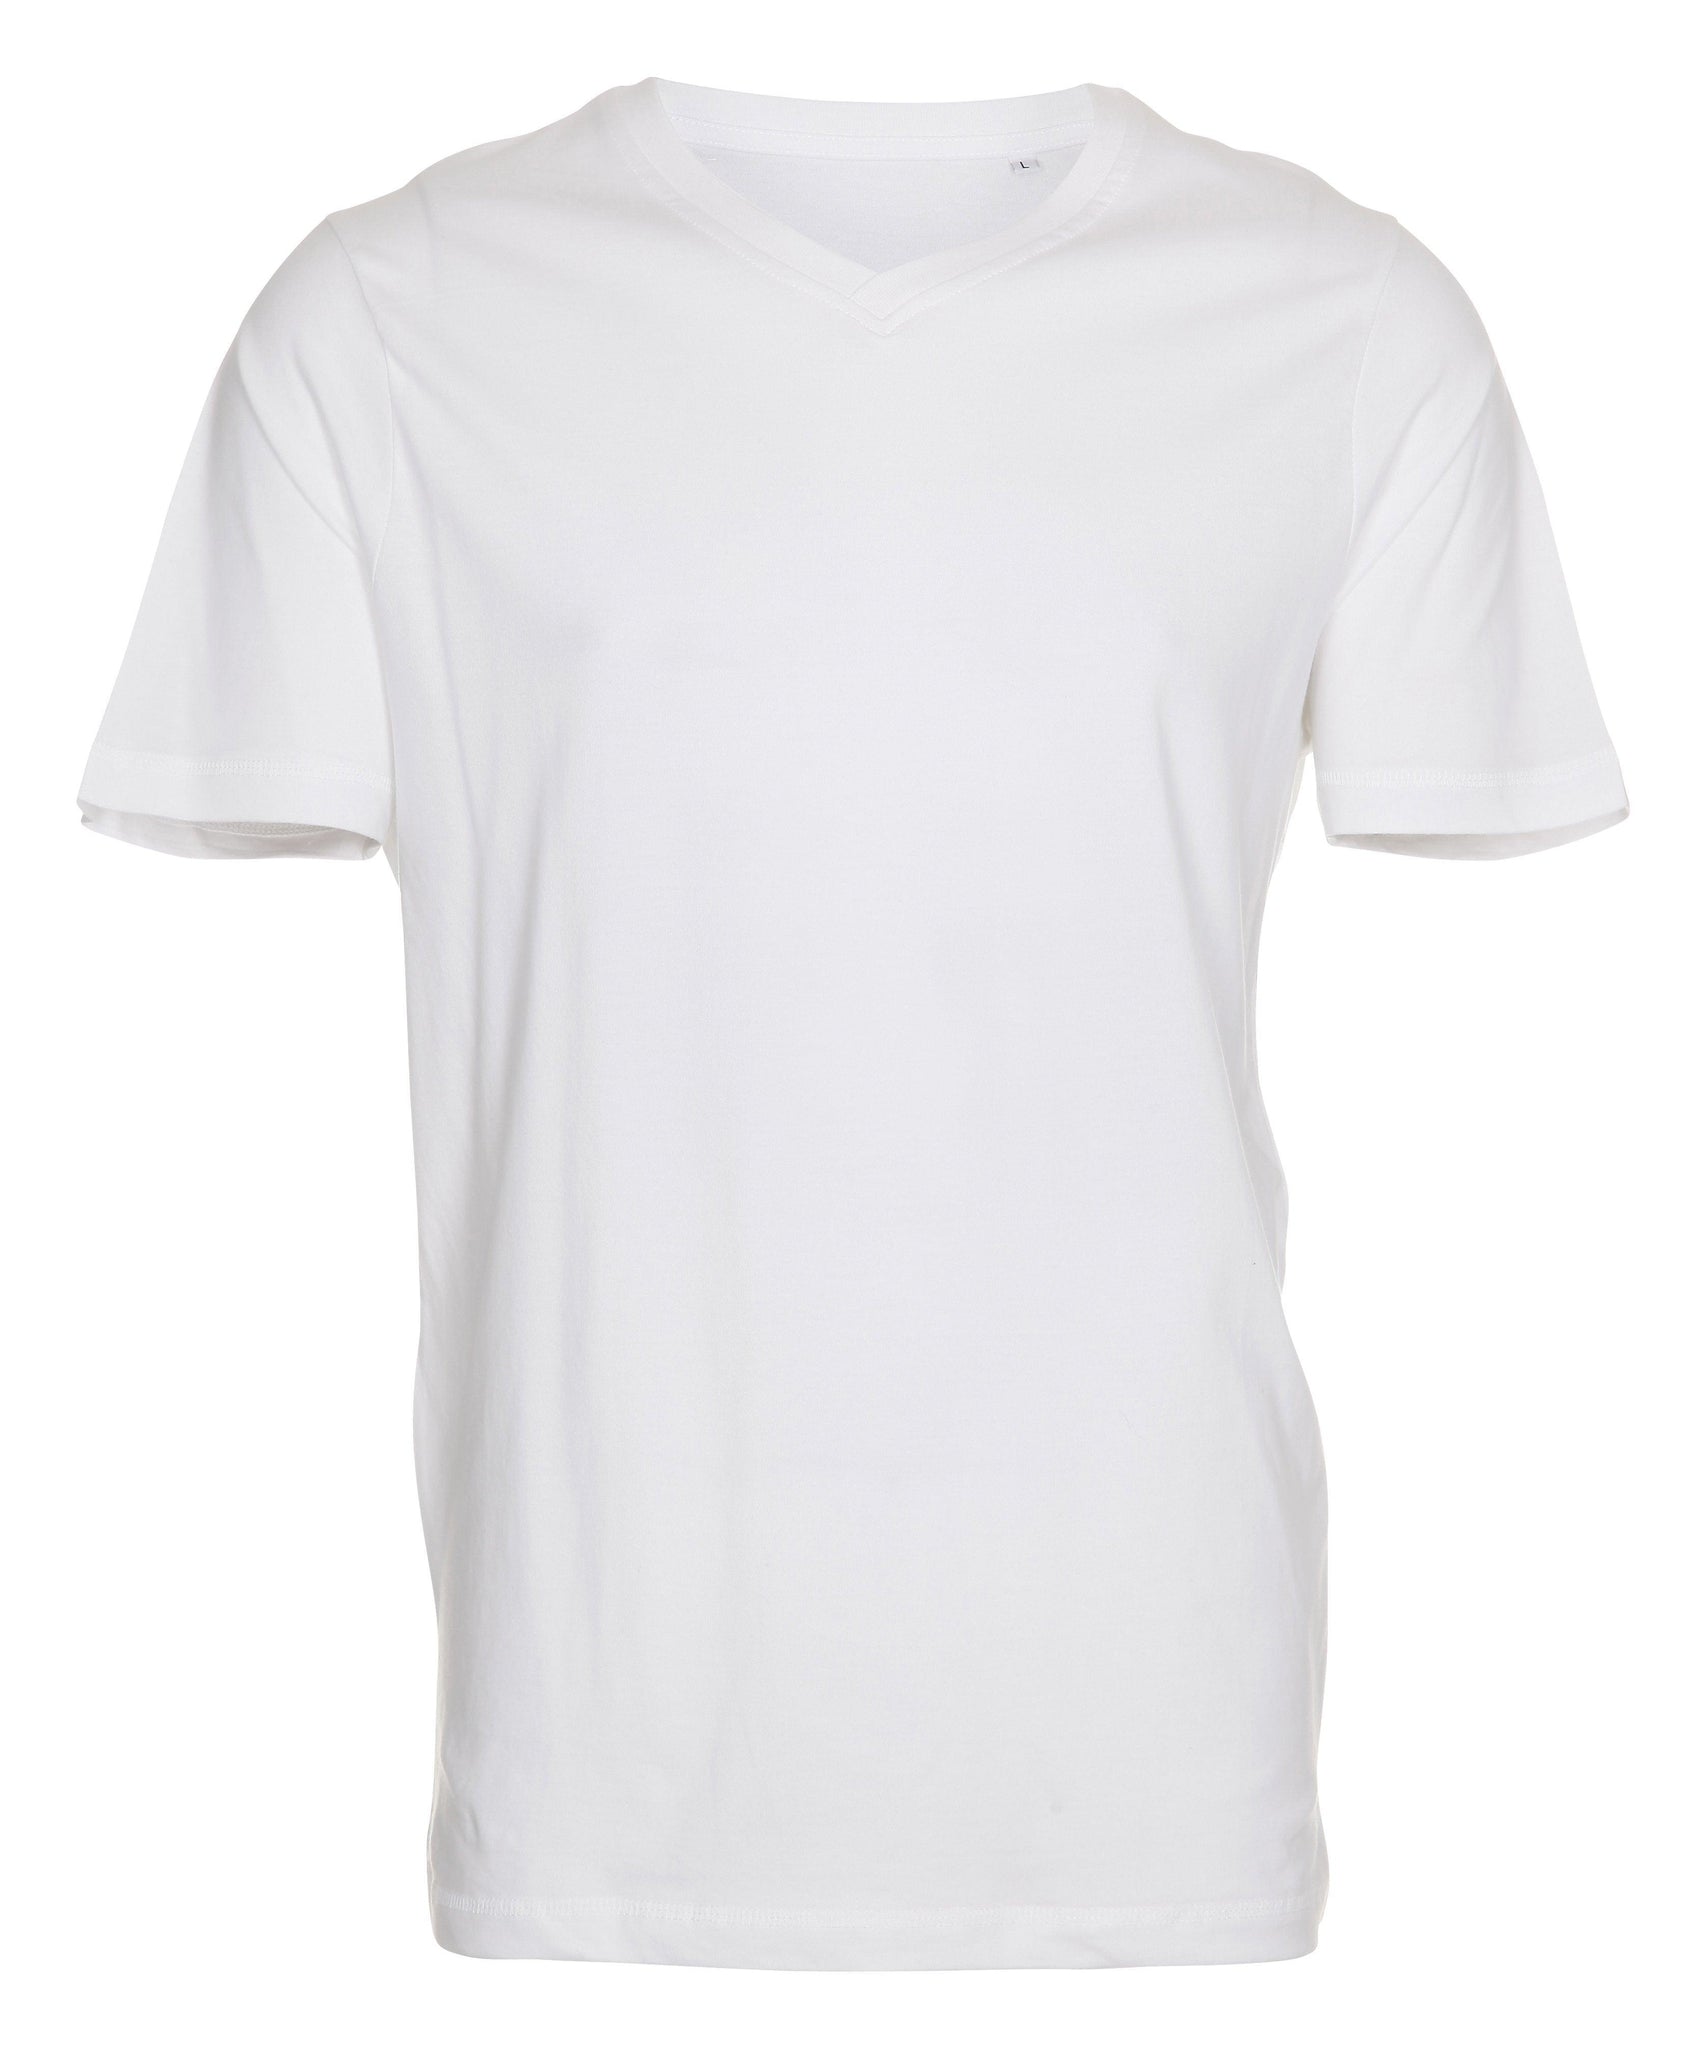 LabelFree FASHION V-NECK - T-Shirt - JA Profil 